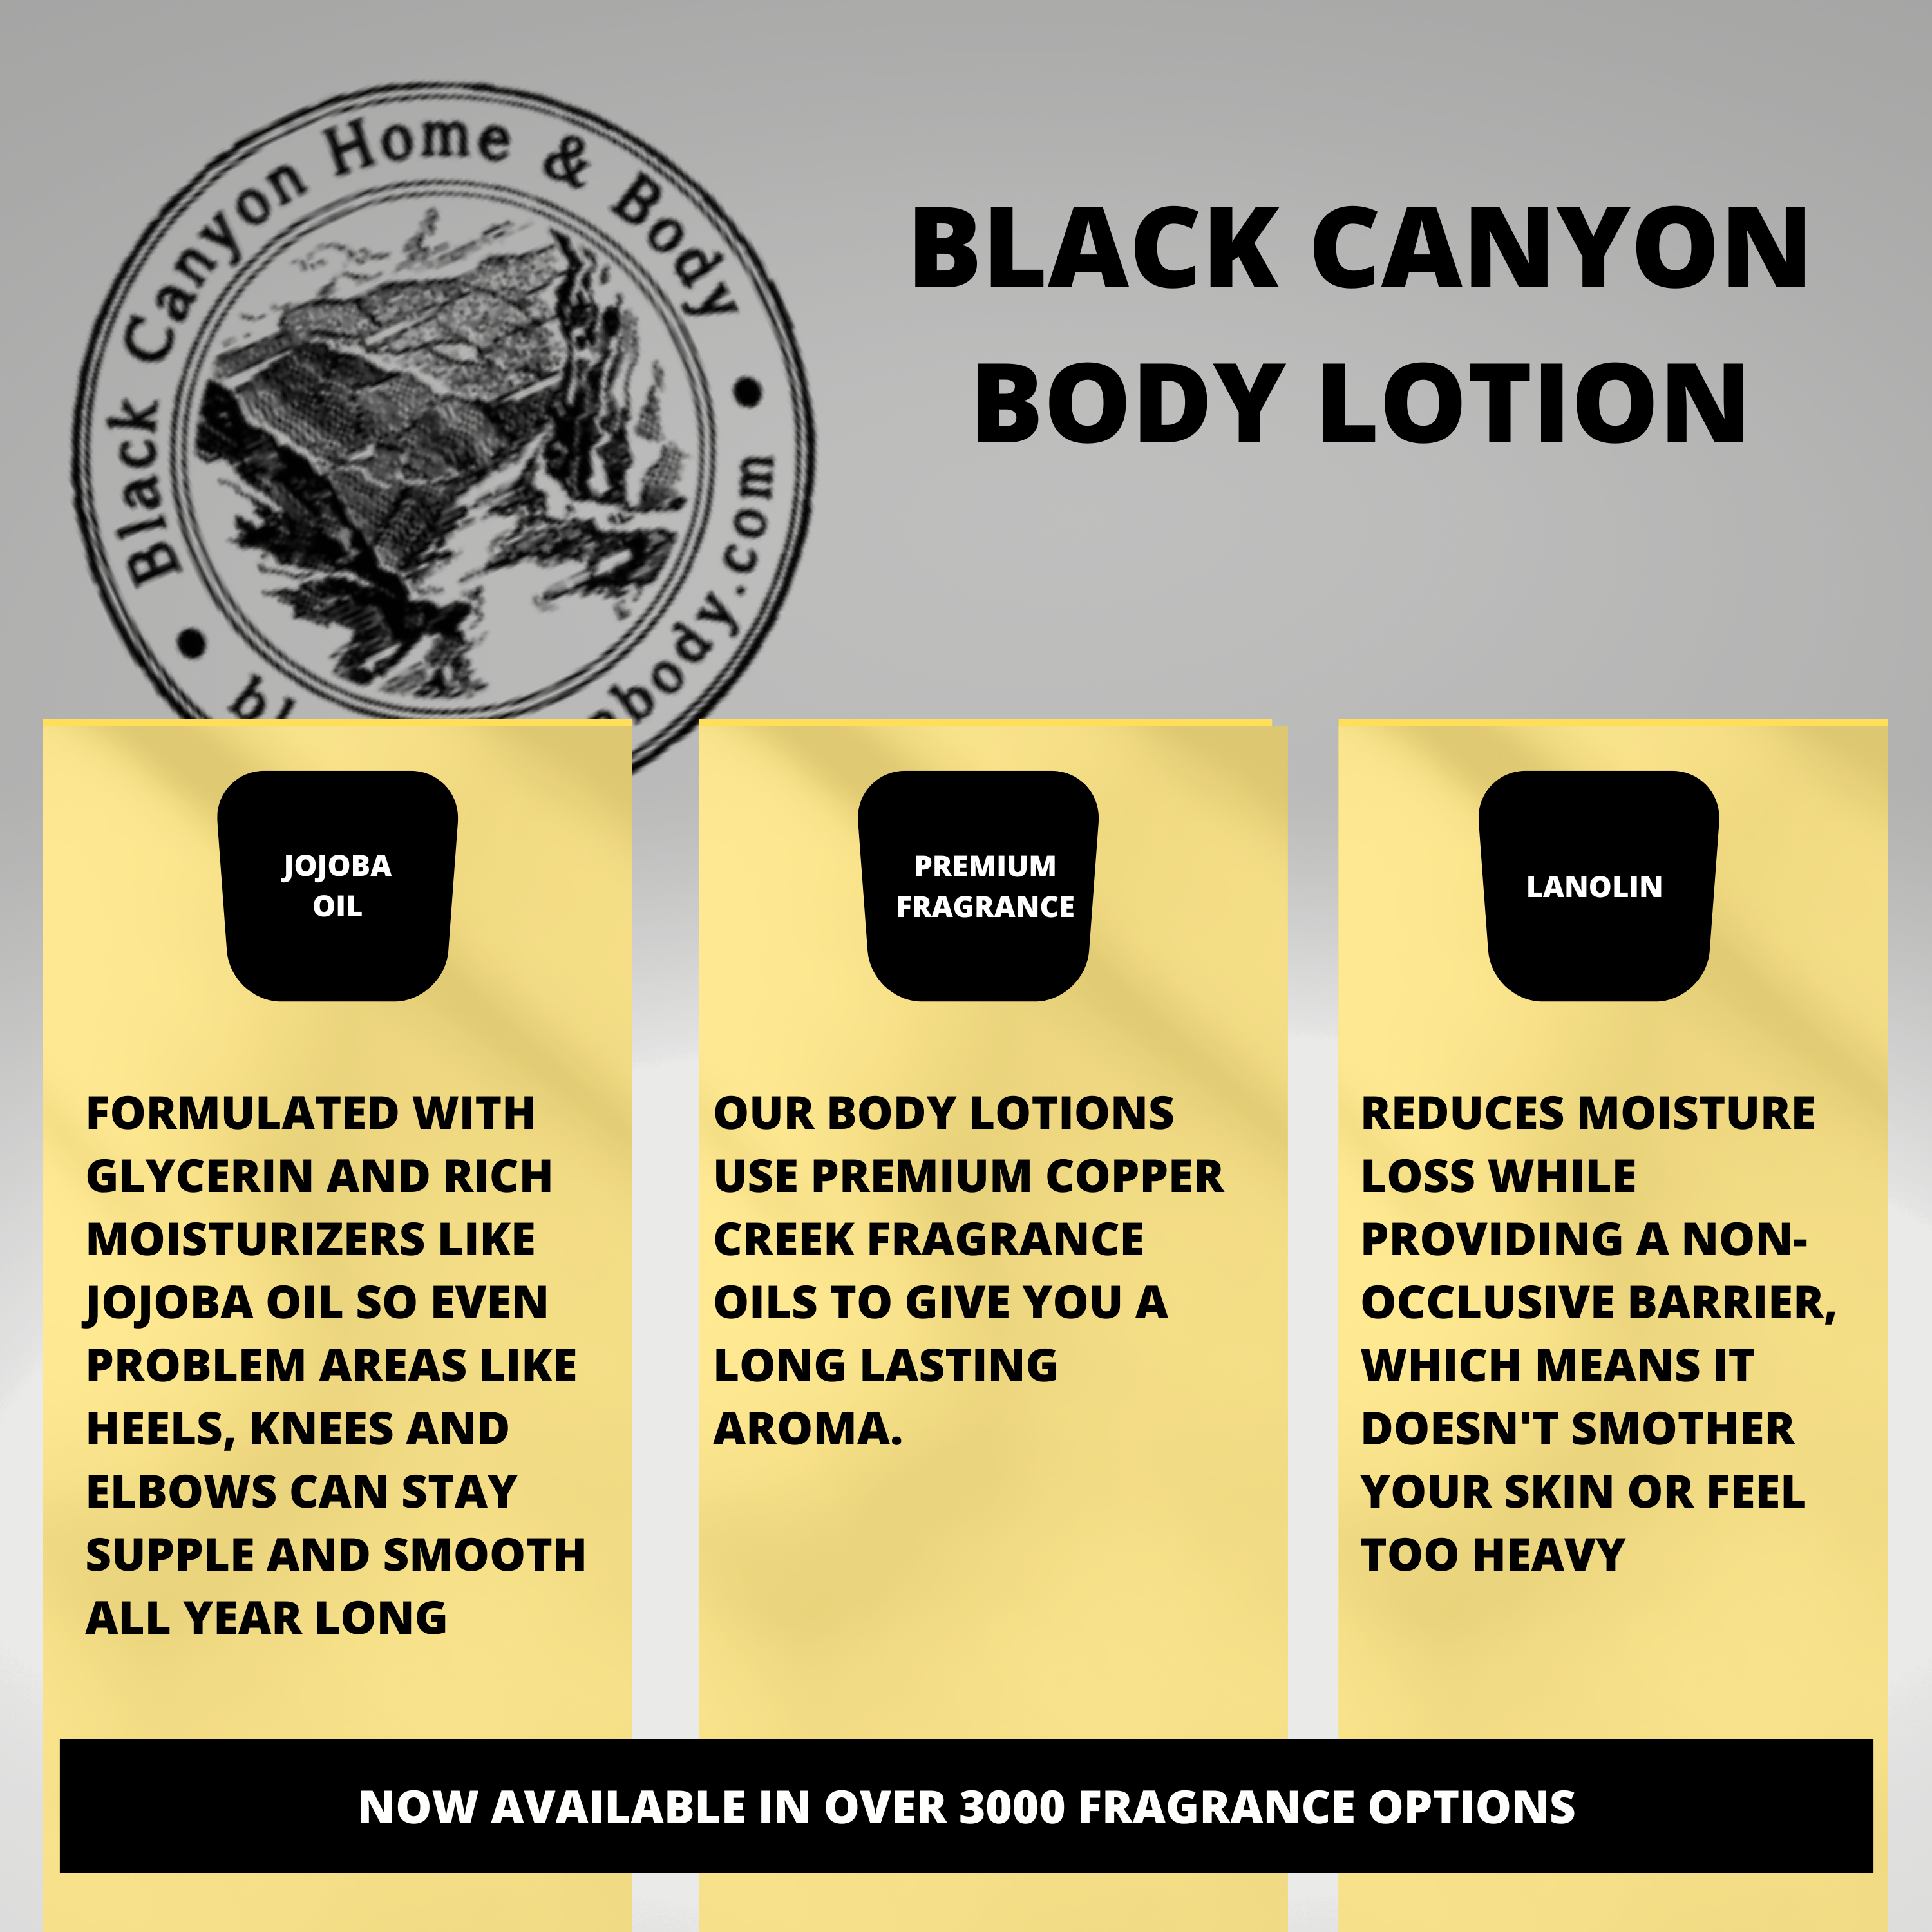 Black Canyon Black Cauldron Scented Luxury Body Lotion with Lanolin and Jojoba Oil